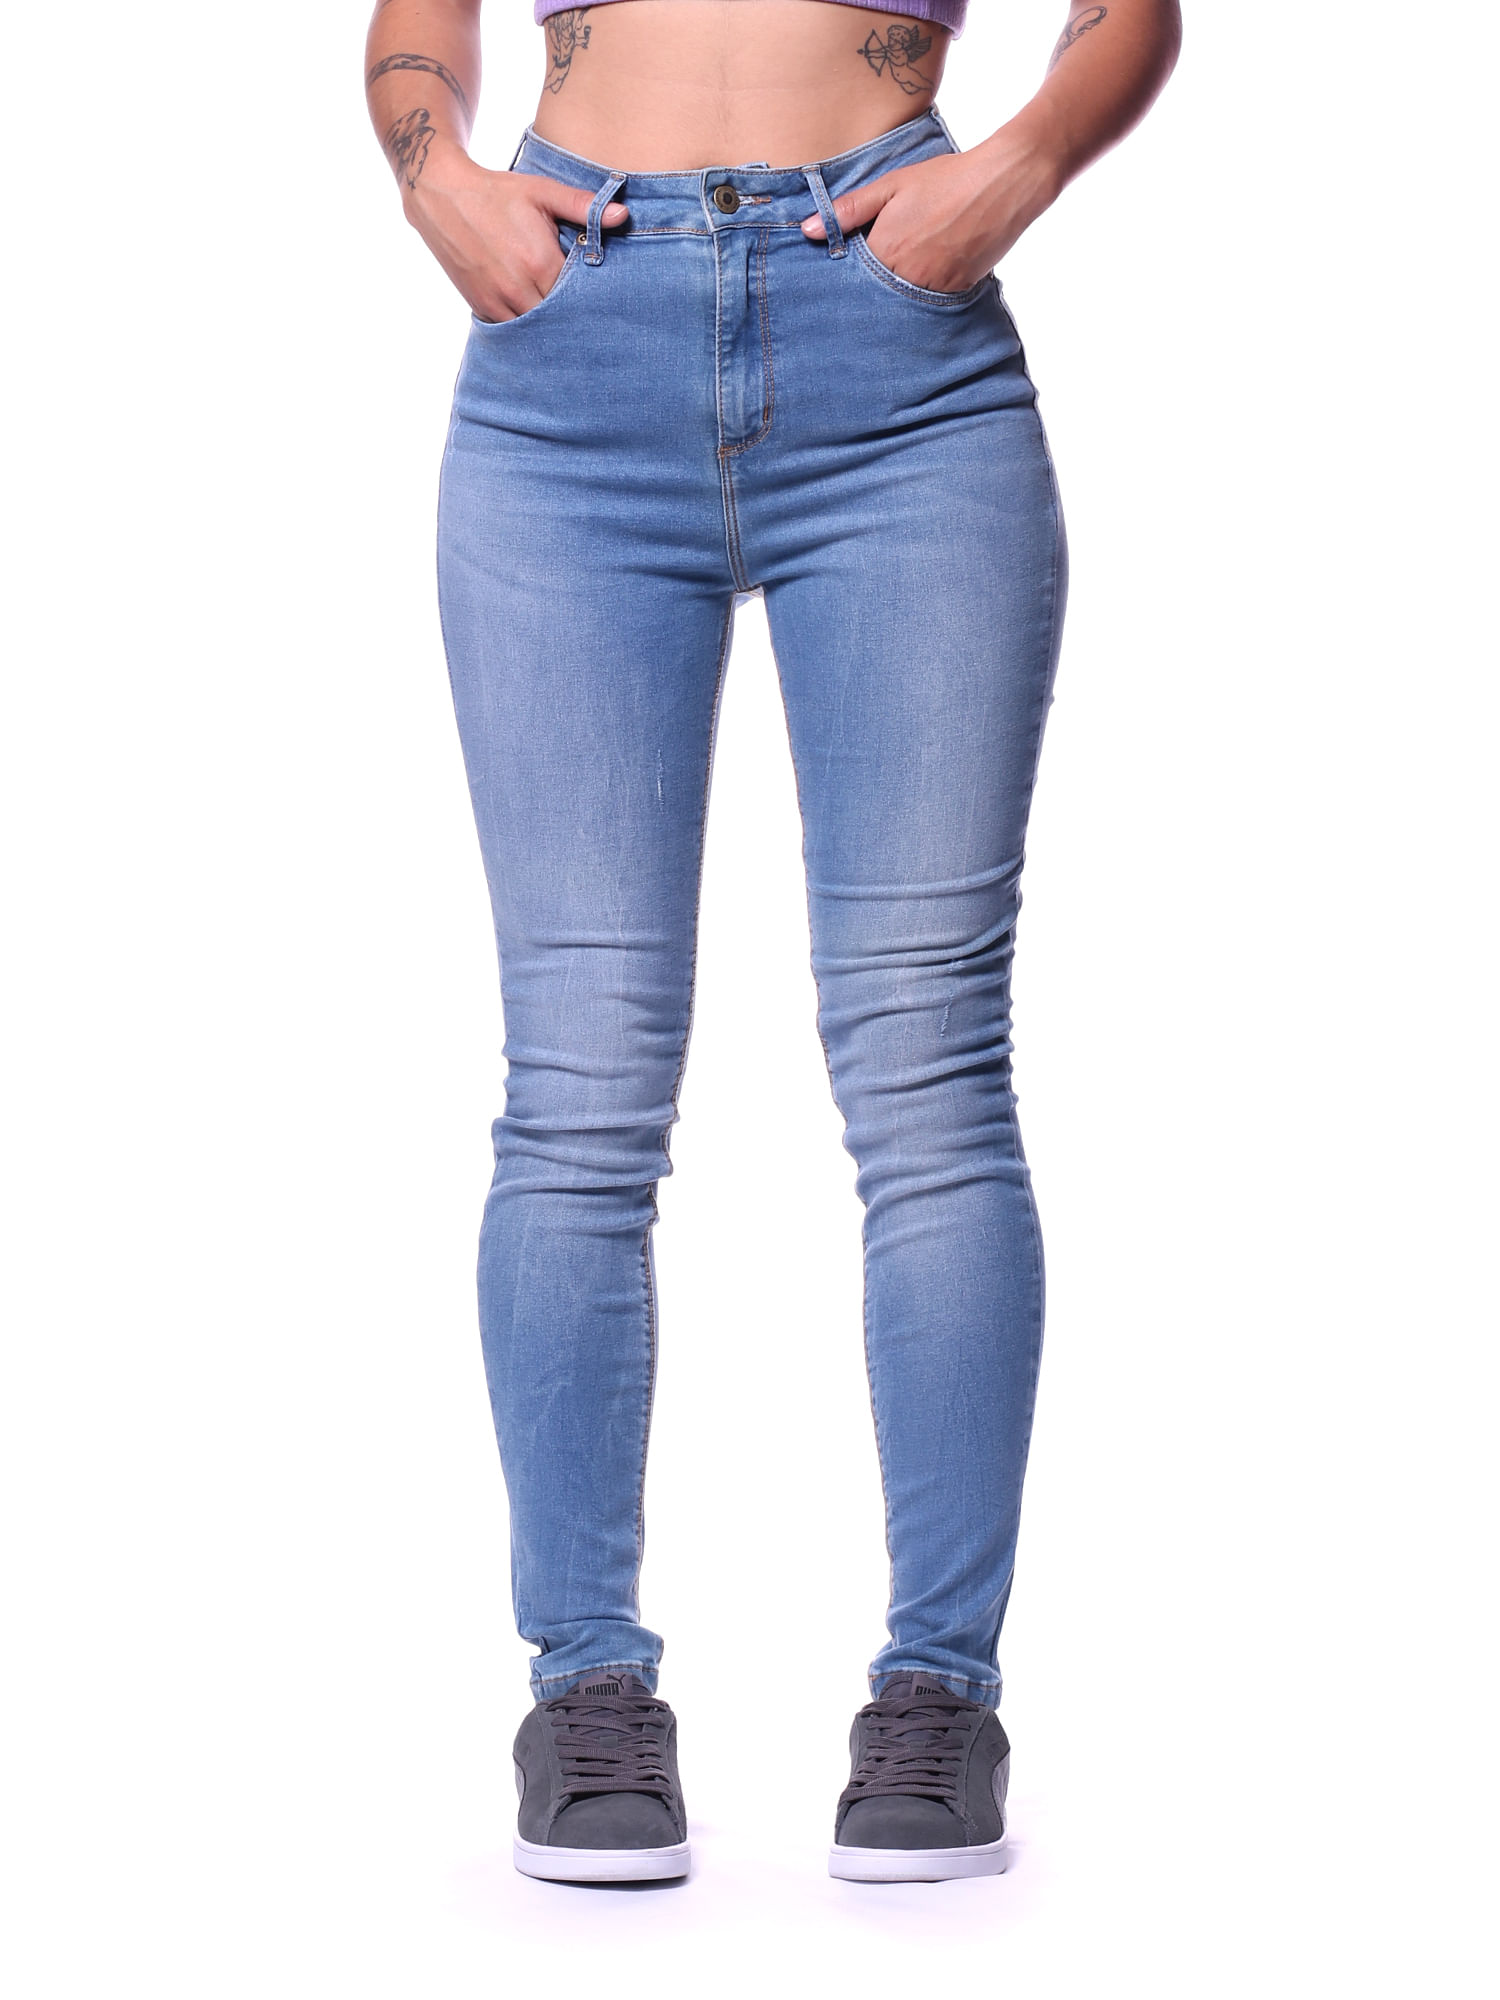 Calca-bali-hai-feminina-push-up-modeladora-Jeans